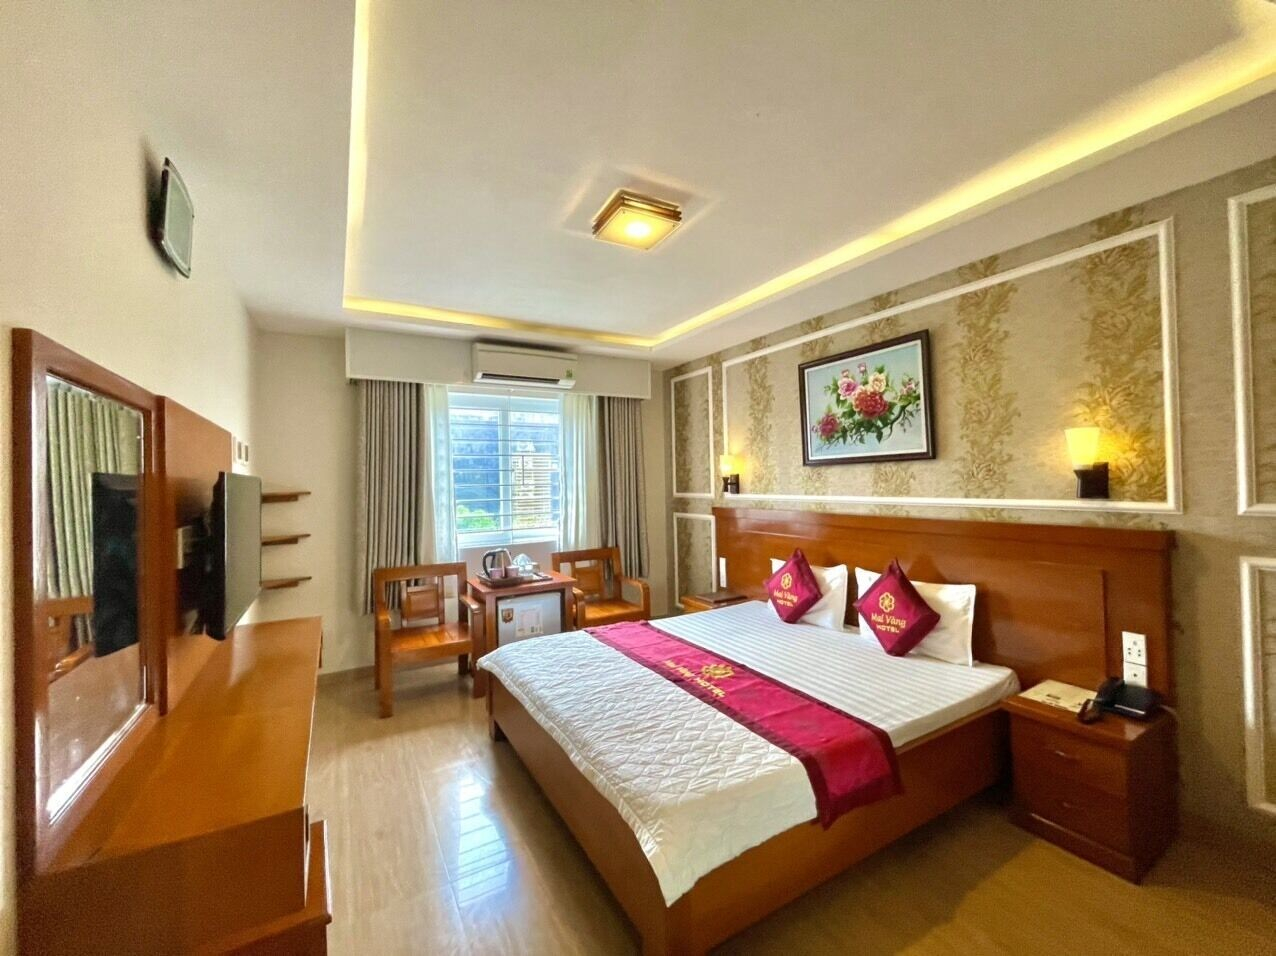 Bedroom 4, Mai Vang Hotel, Binh Tan